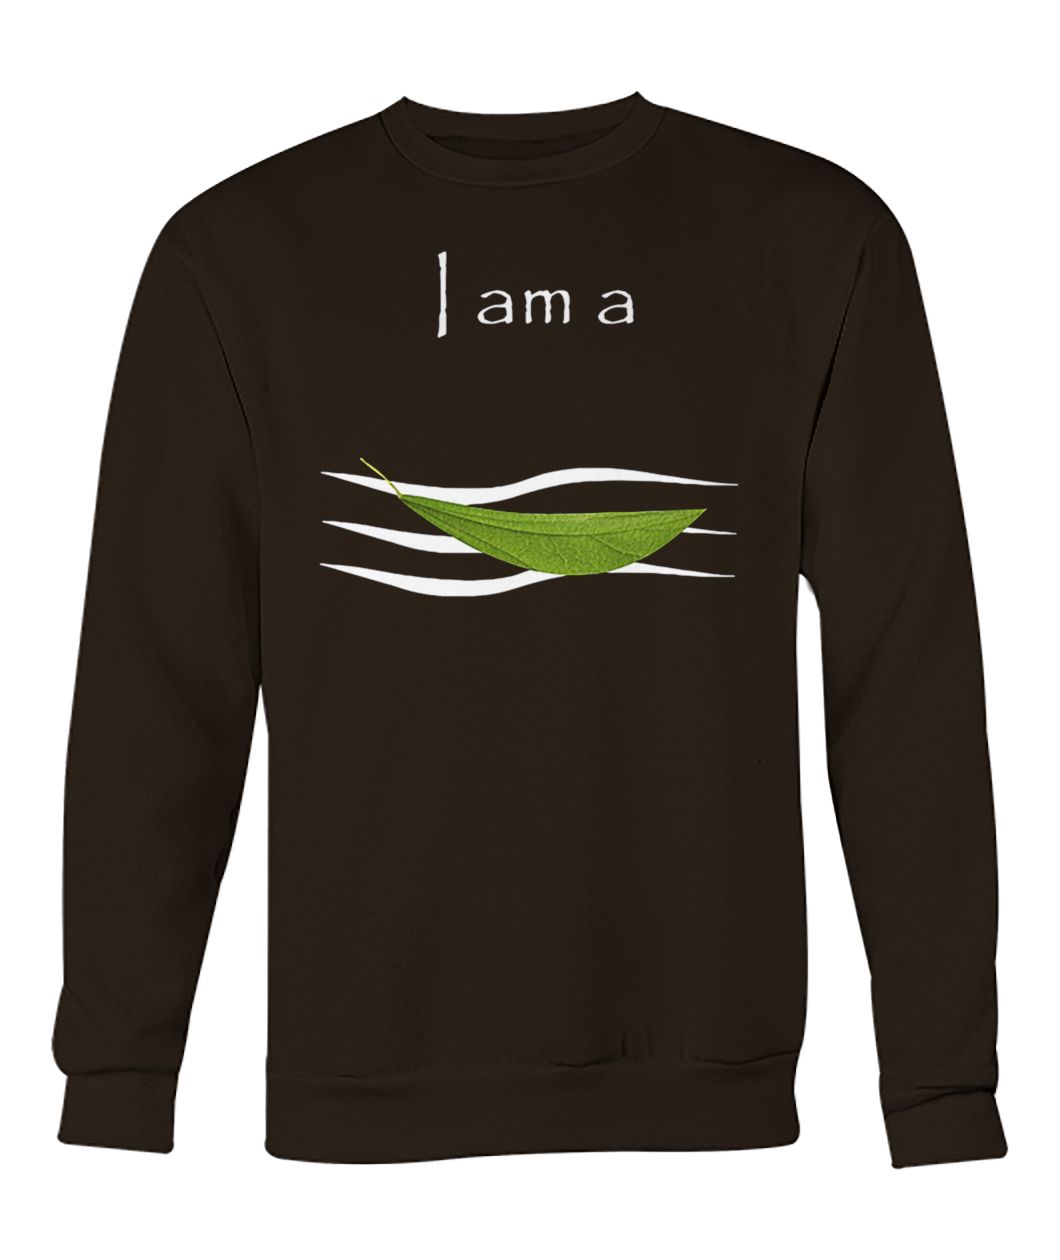 I am a leaf on the wind crew neck sweatshirt